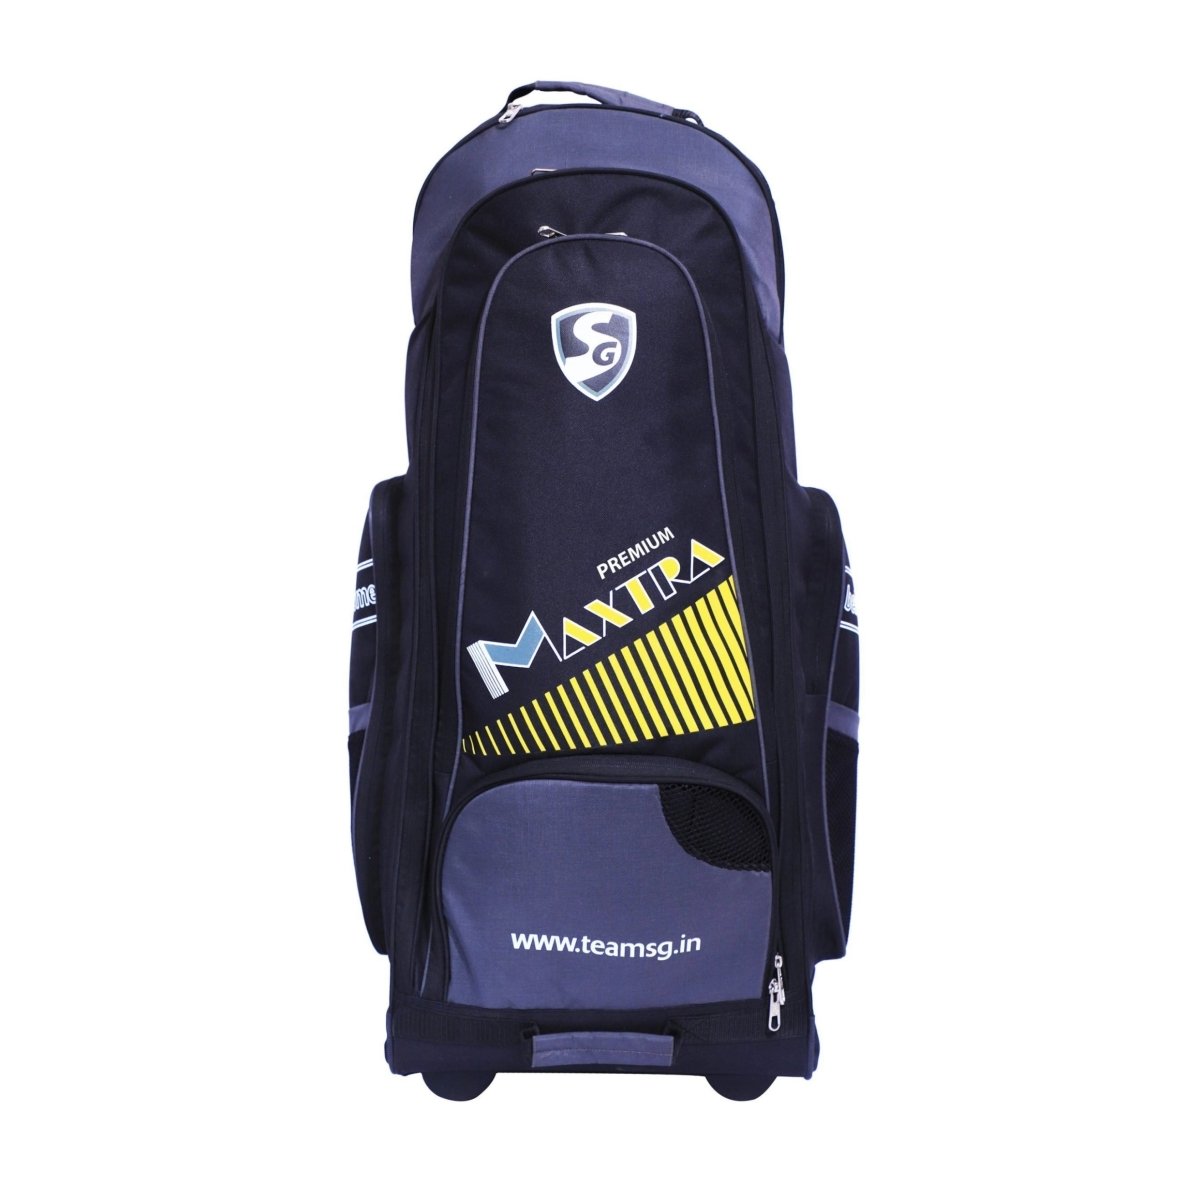 SG Maxtra Premium Cricket Kit Bag - Acrux Sports